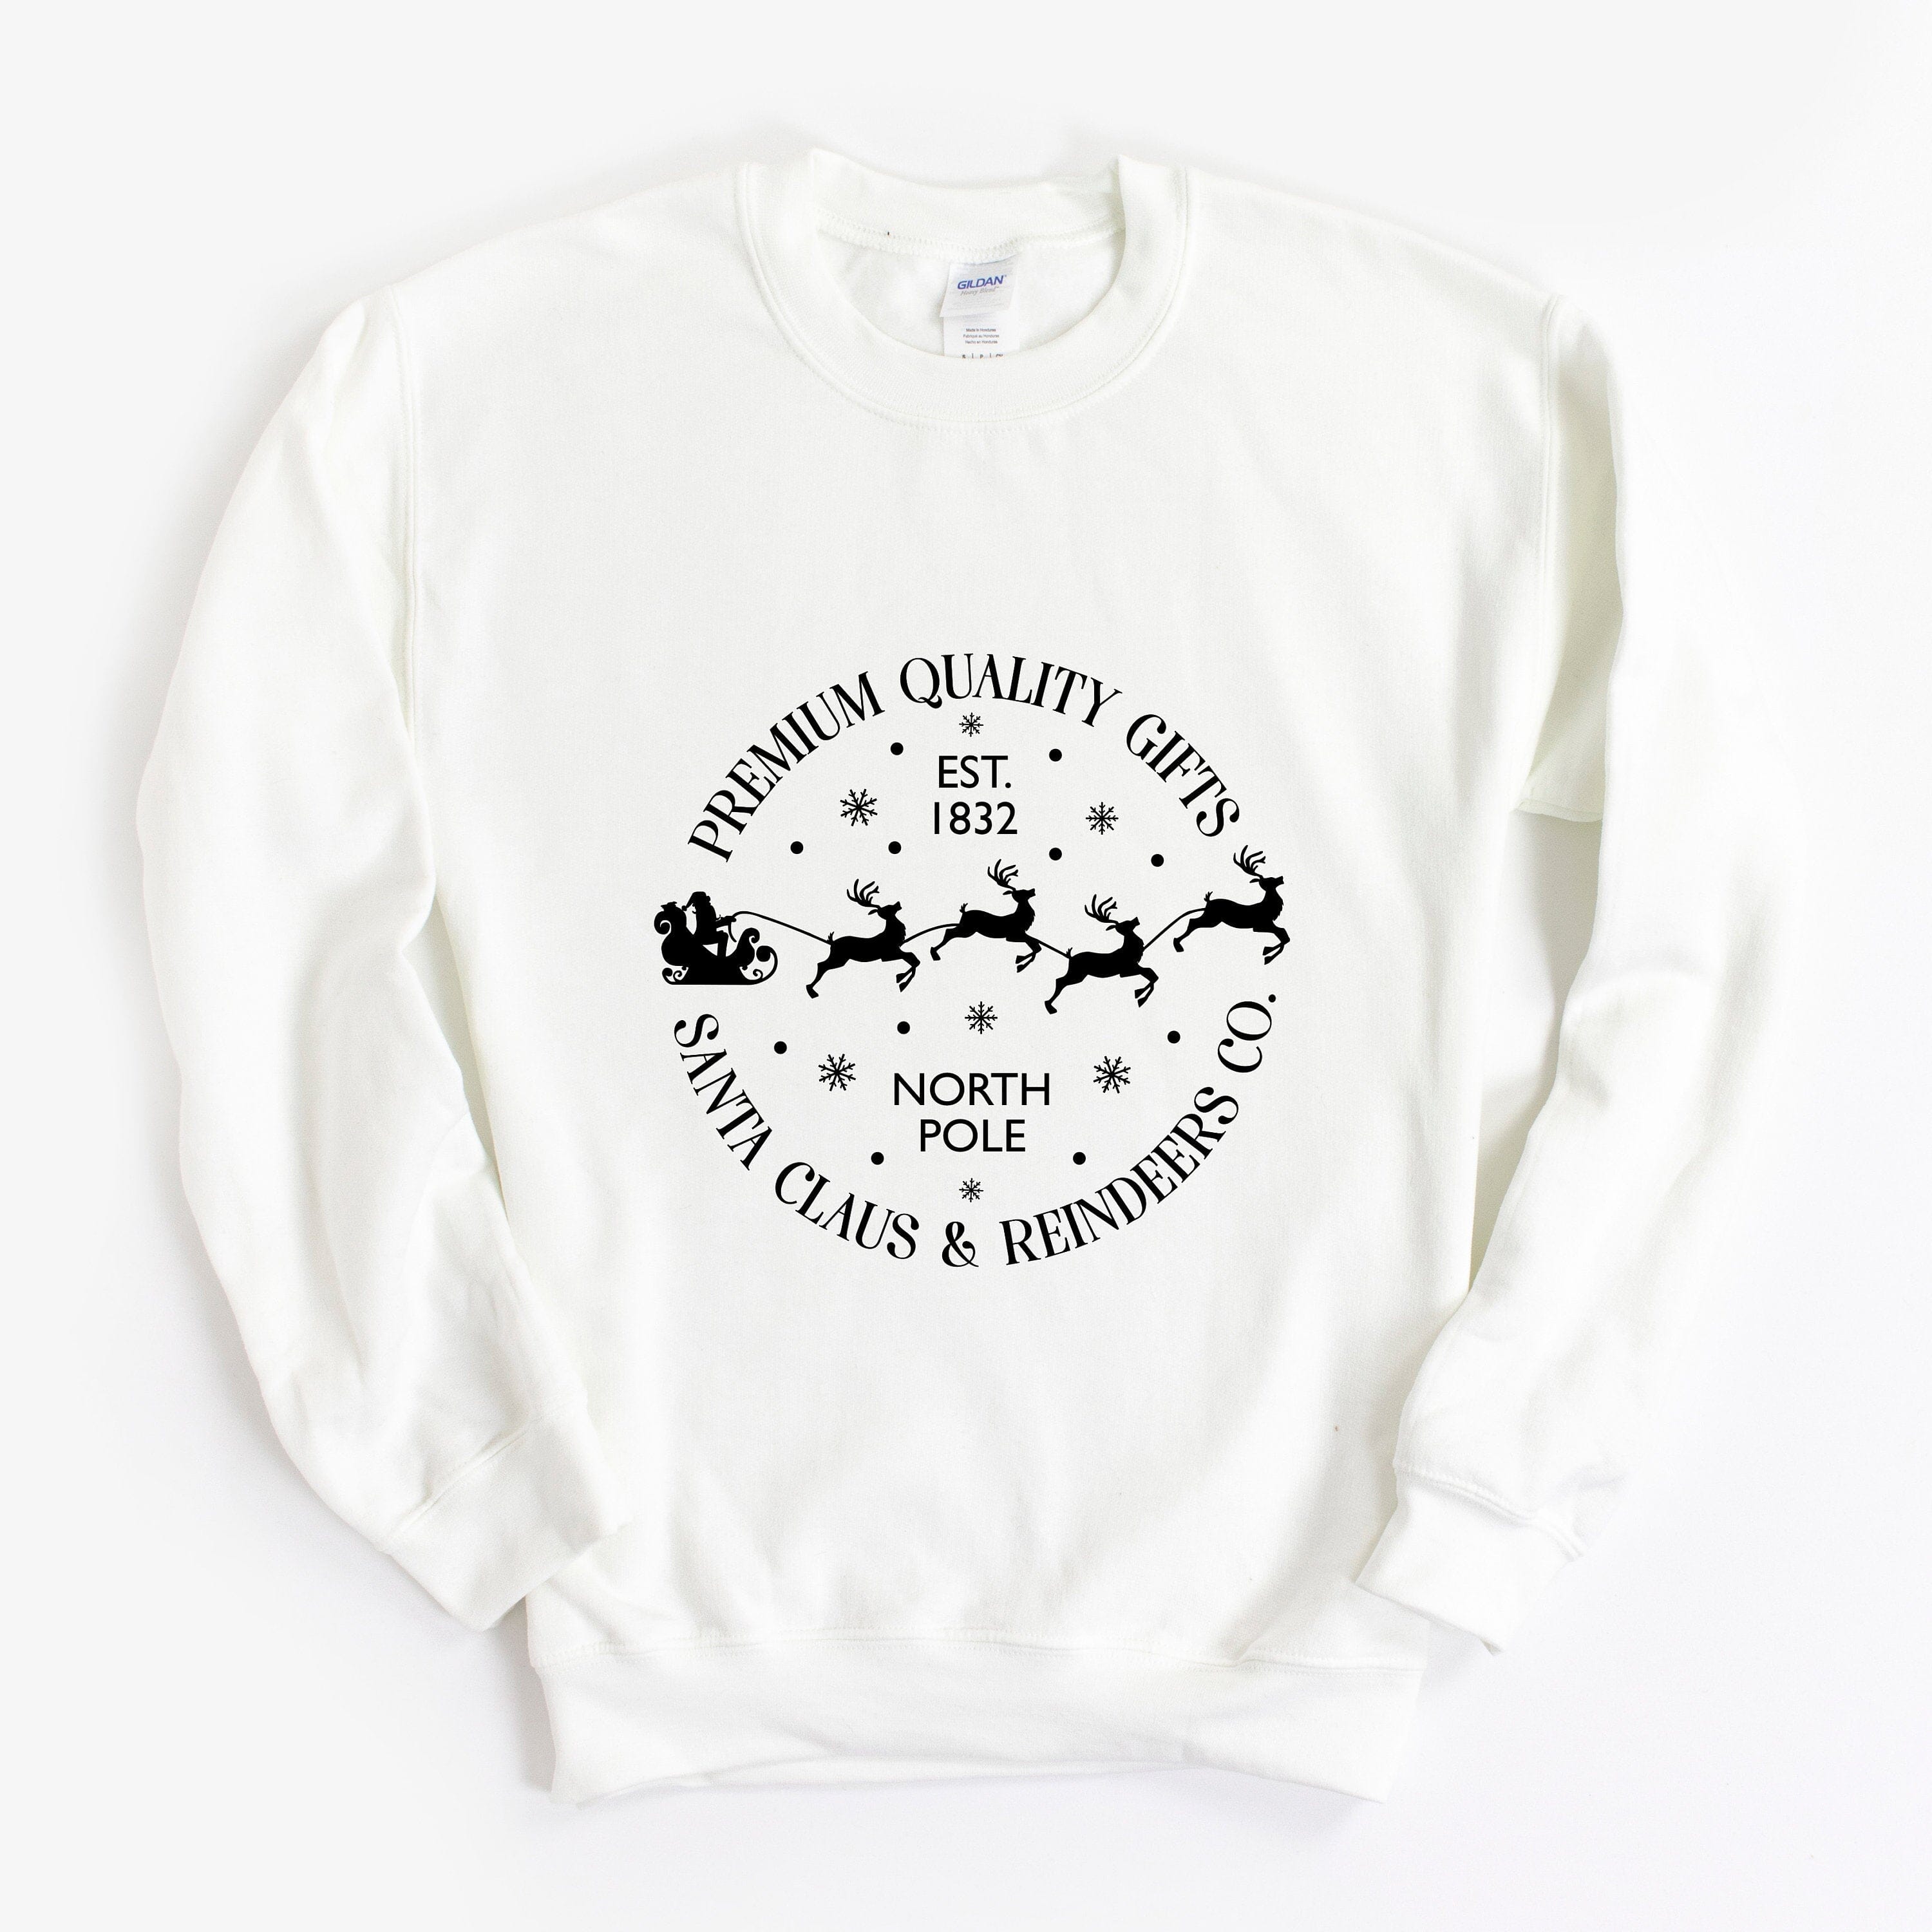 Christmas Sweatshirt, Xmas Outfit, Unique Design Santa Claus And Reindeers Co., Retro Sweatshirt